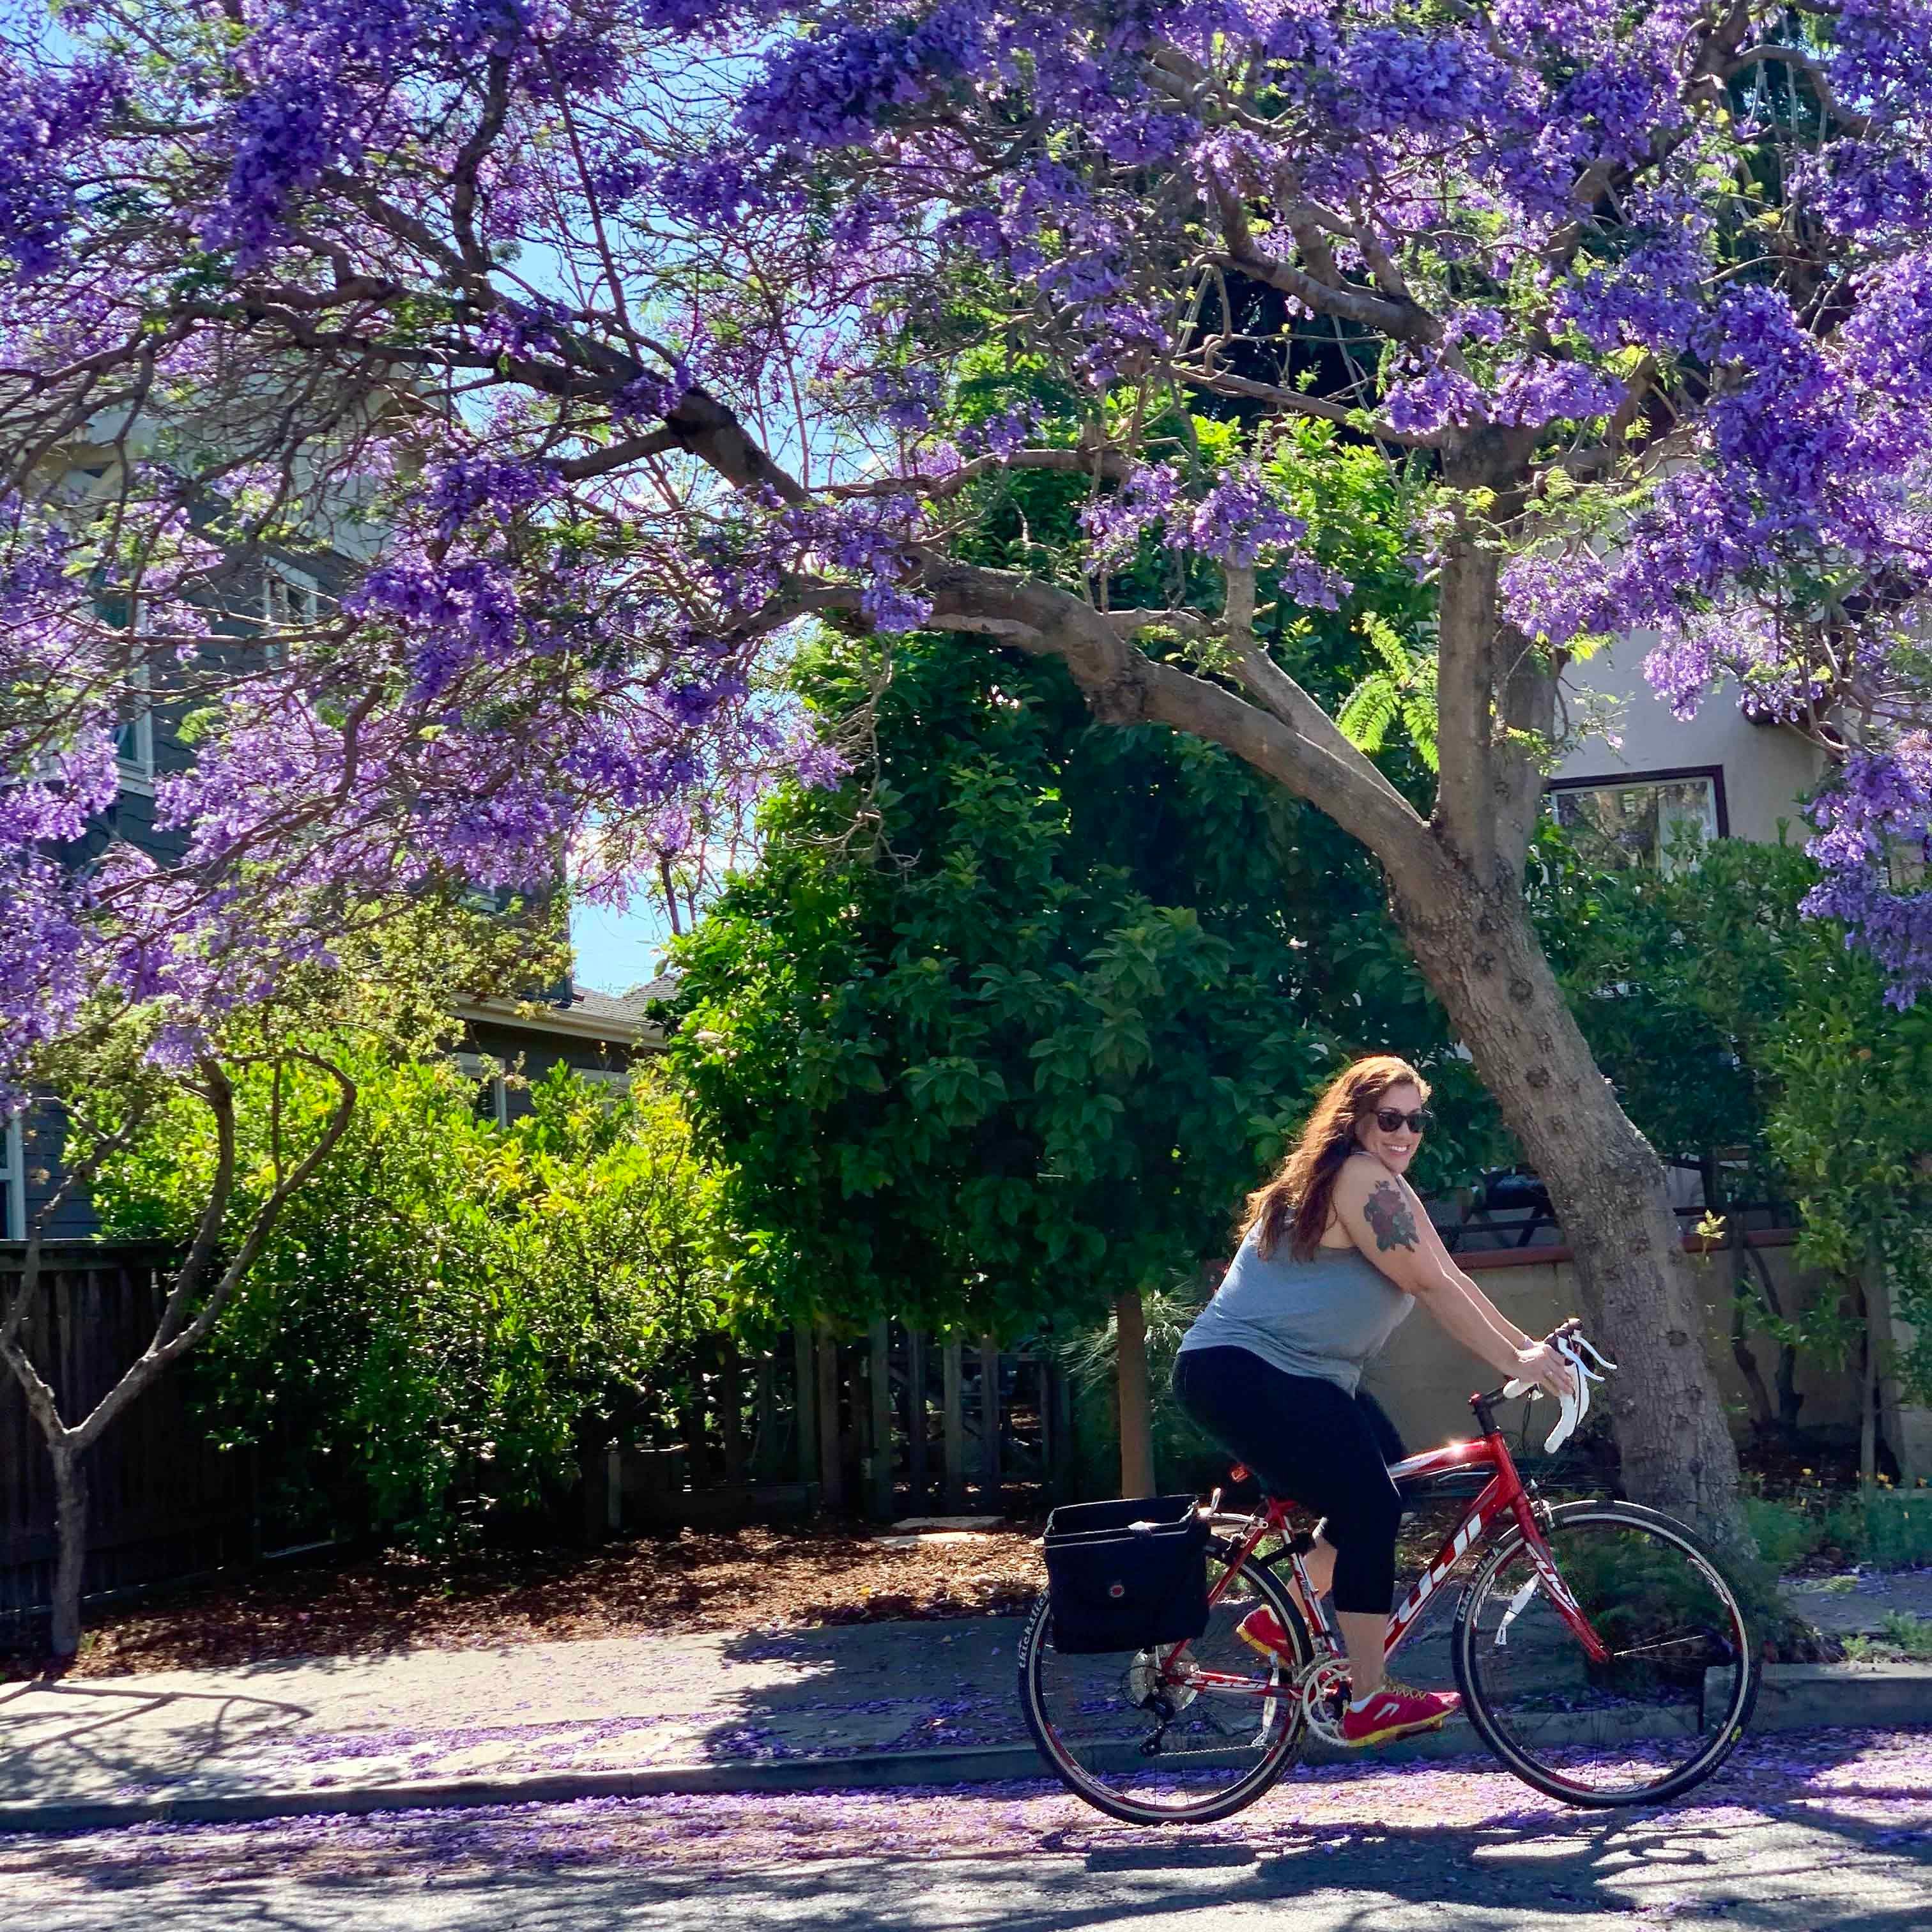 Woman on a bike amongst trees with purple flowers